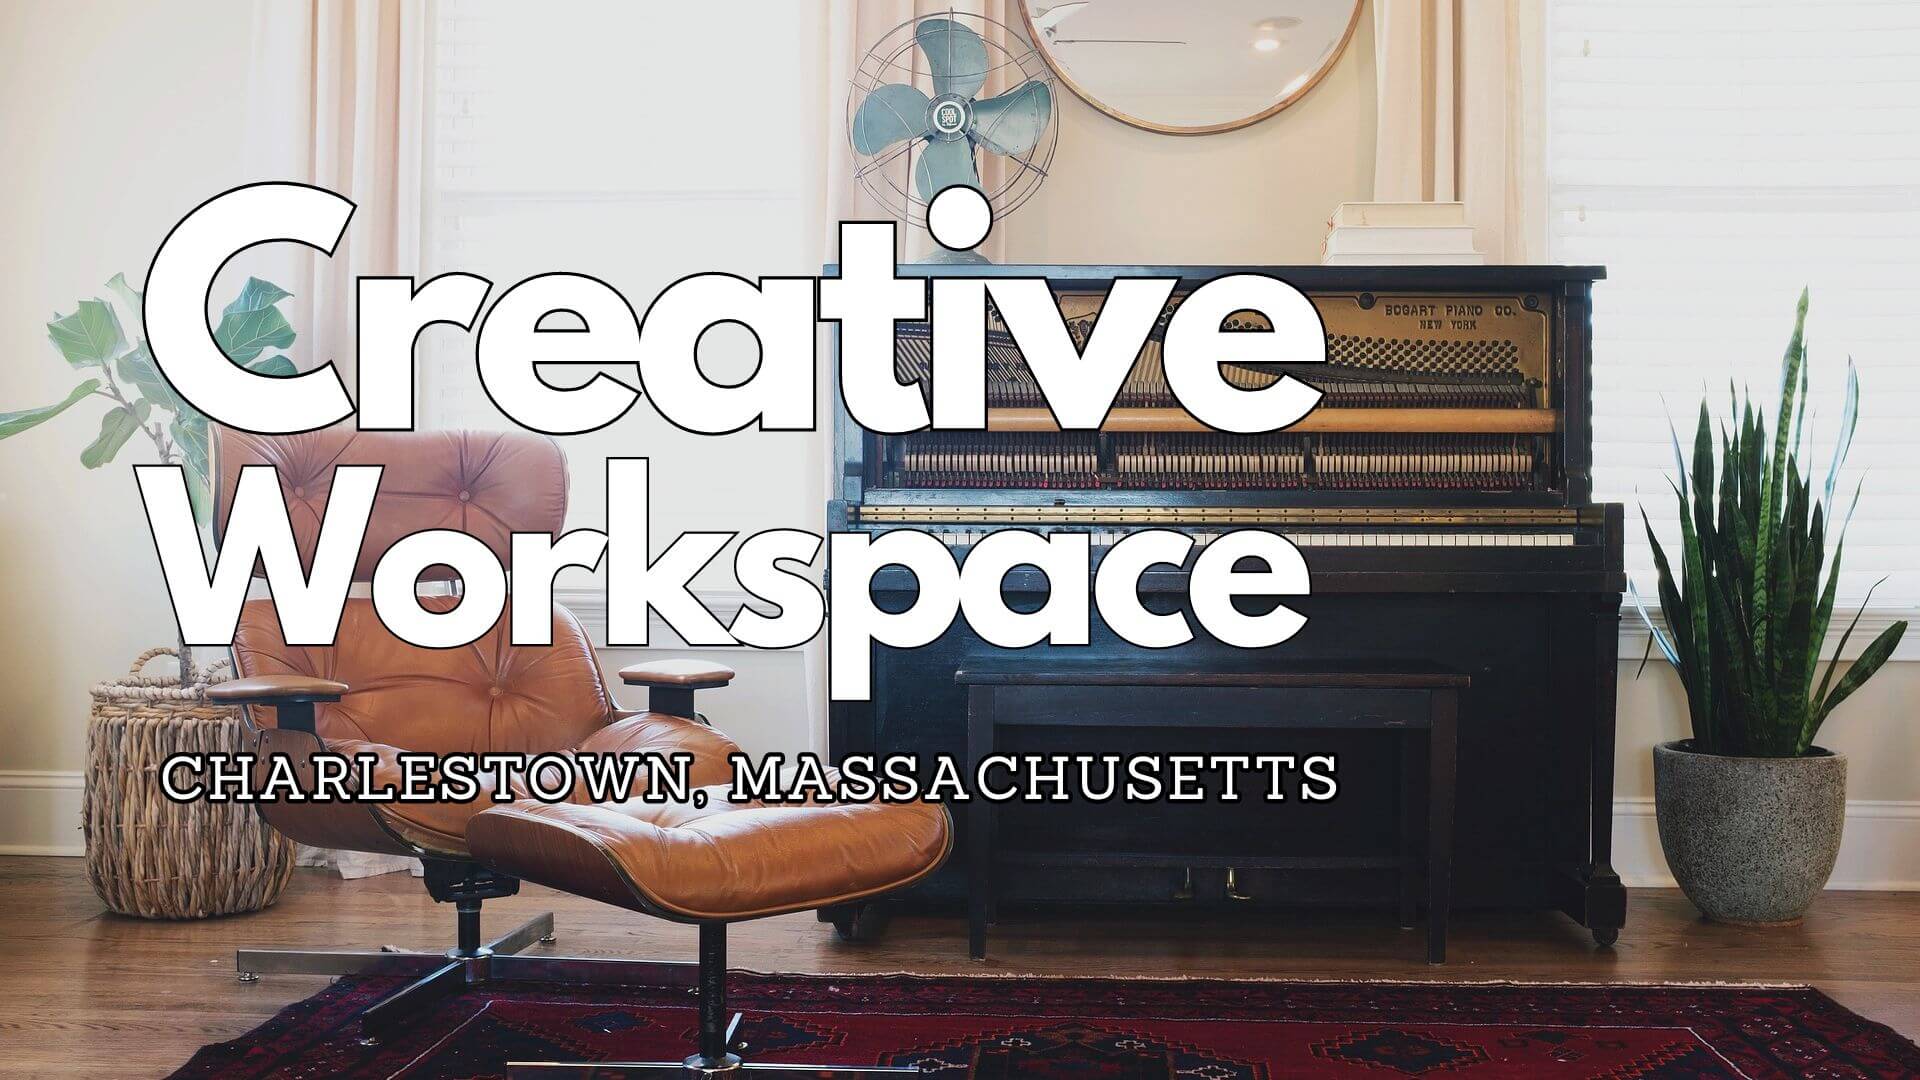 Creative Workspace in Charlestown, Massachusetts: Musicians Playground